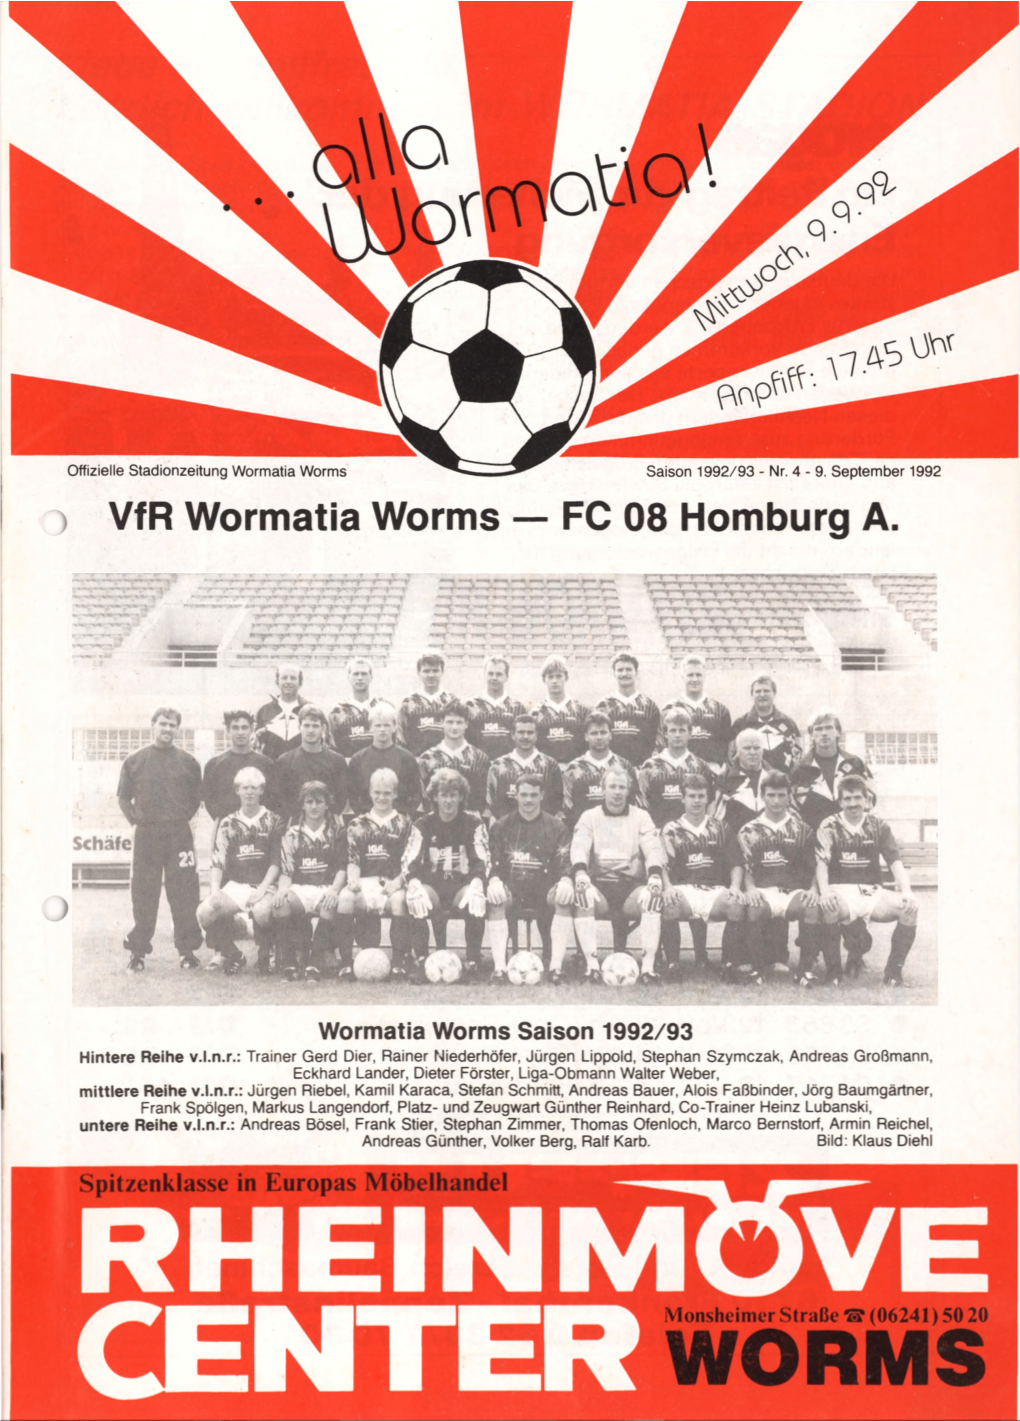 Vfr Wormatia Worms — FC 08 Homburg A